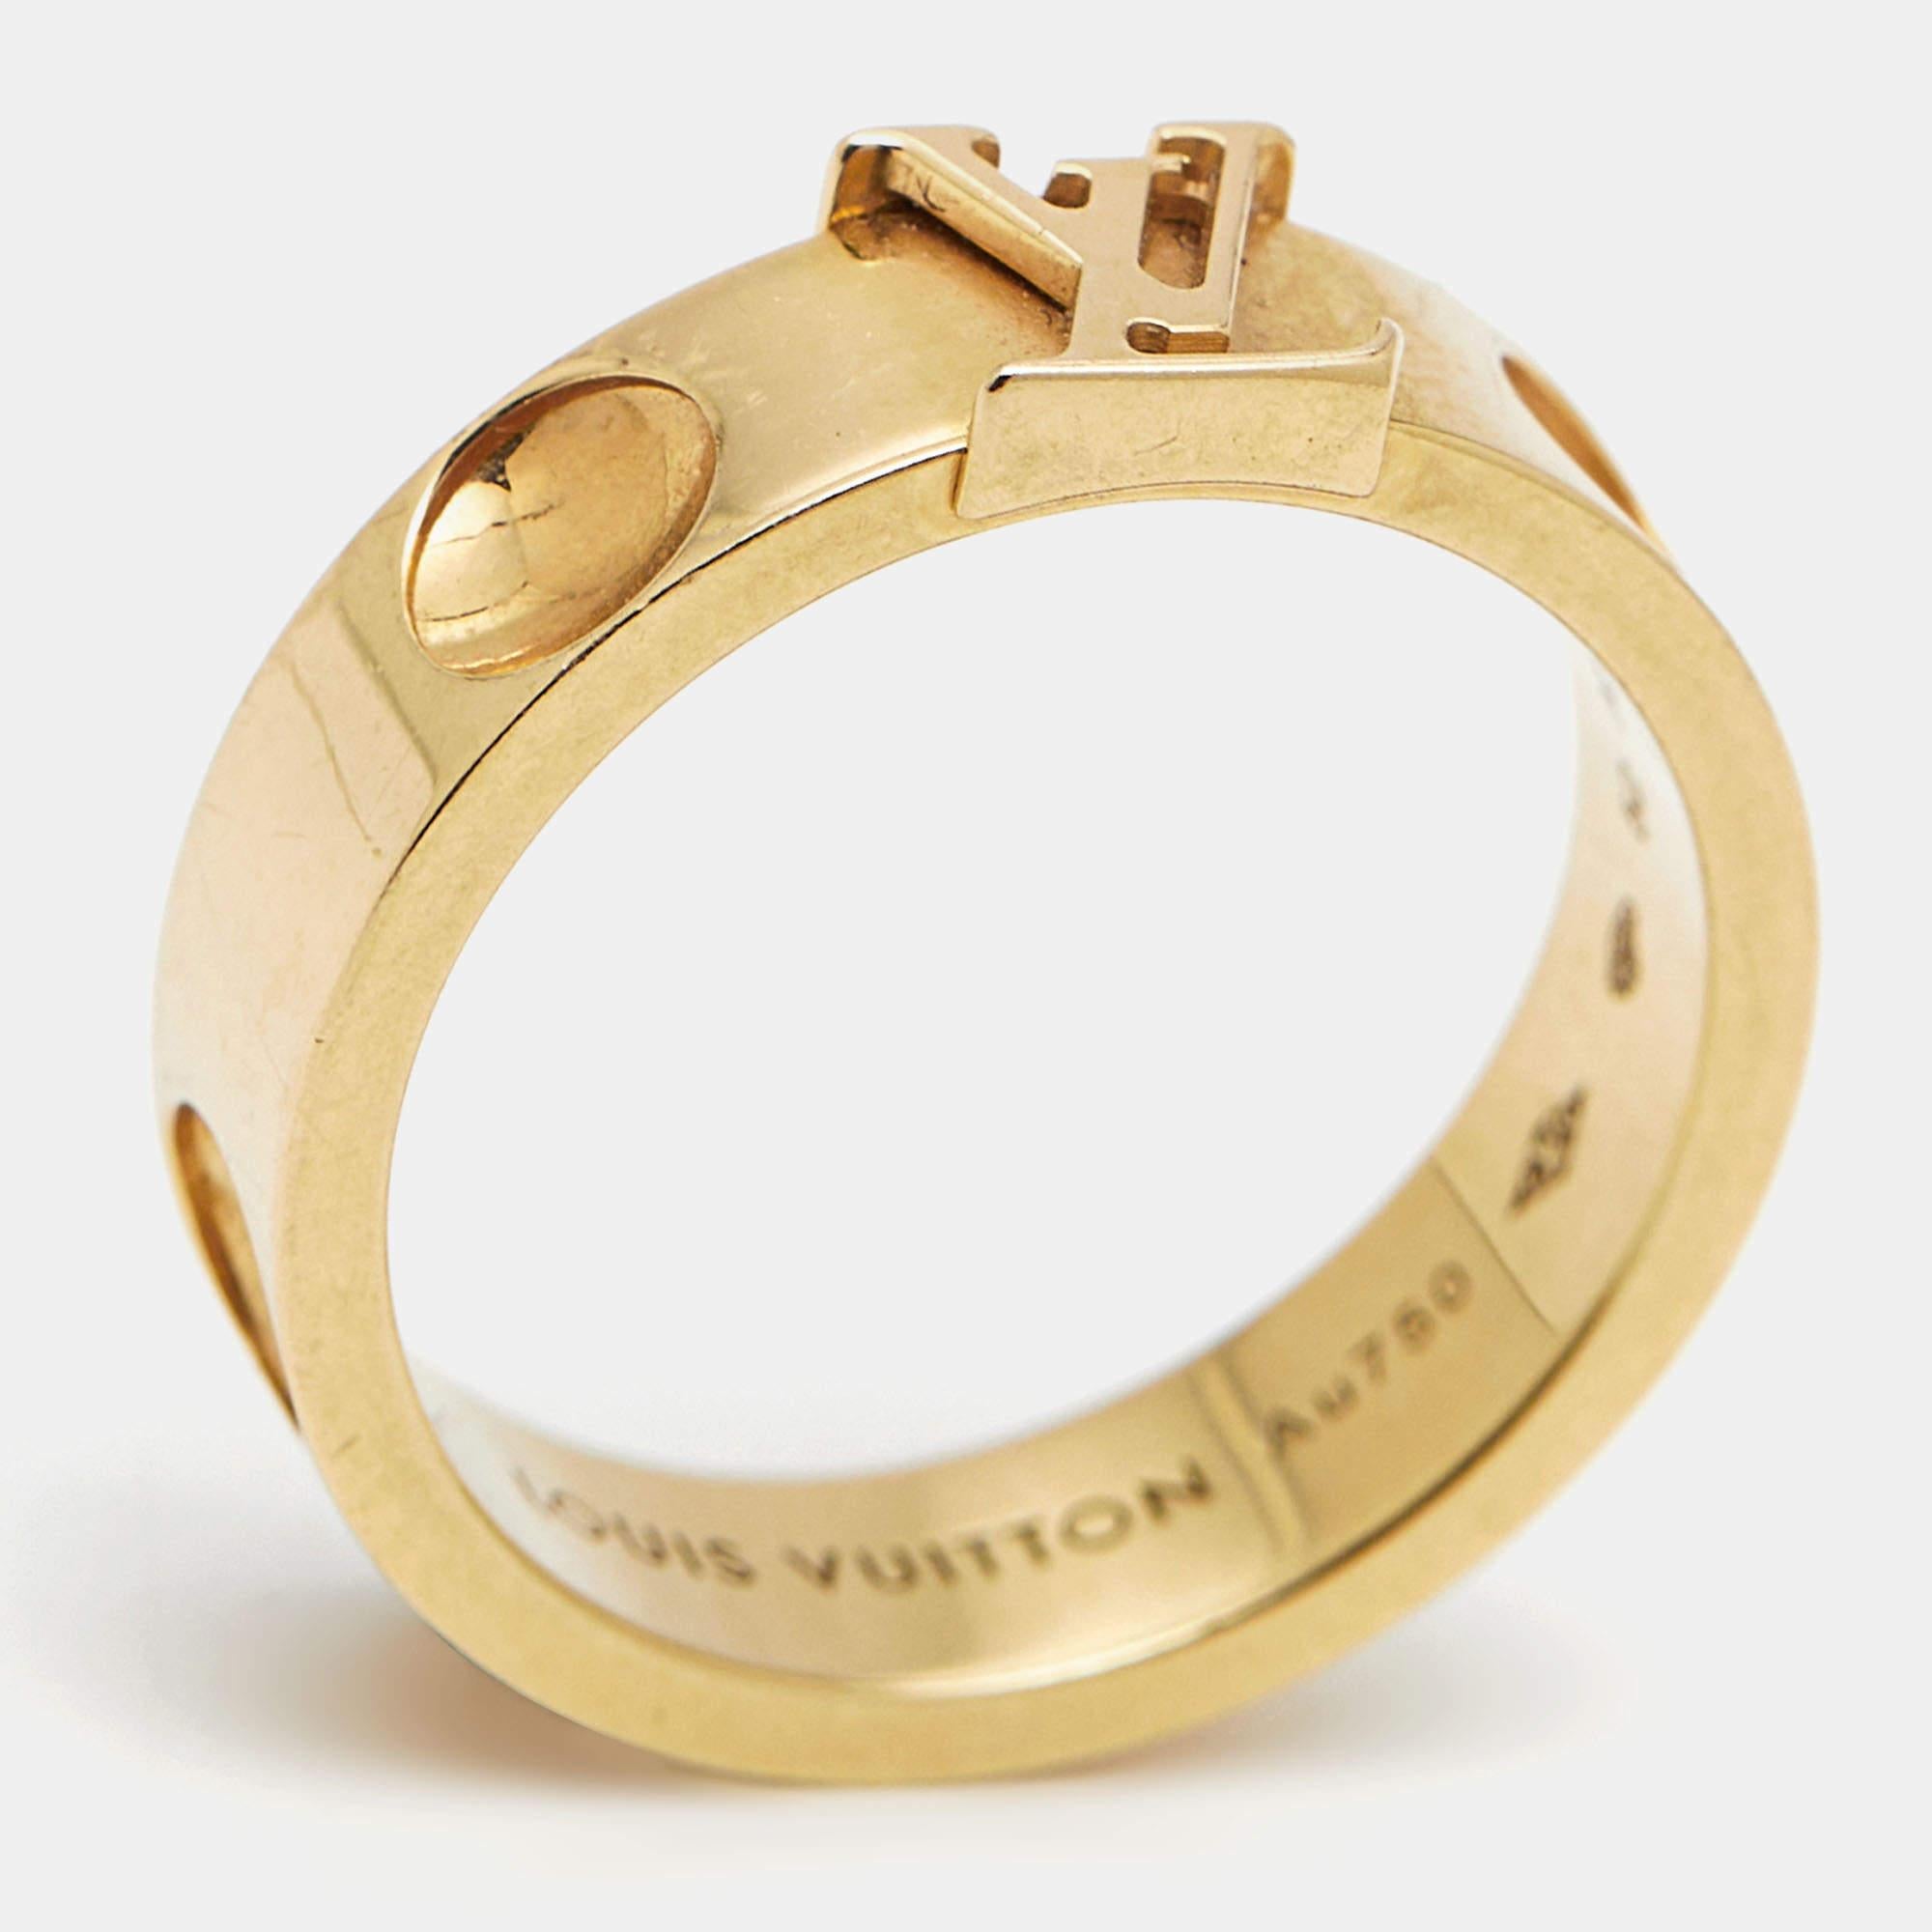 Louis Vuitton Empreinte 18k Yellow Gold Ring Size 52 In Good Condition For Sale In Dubai, Al Qouz 2